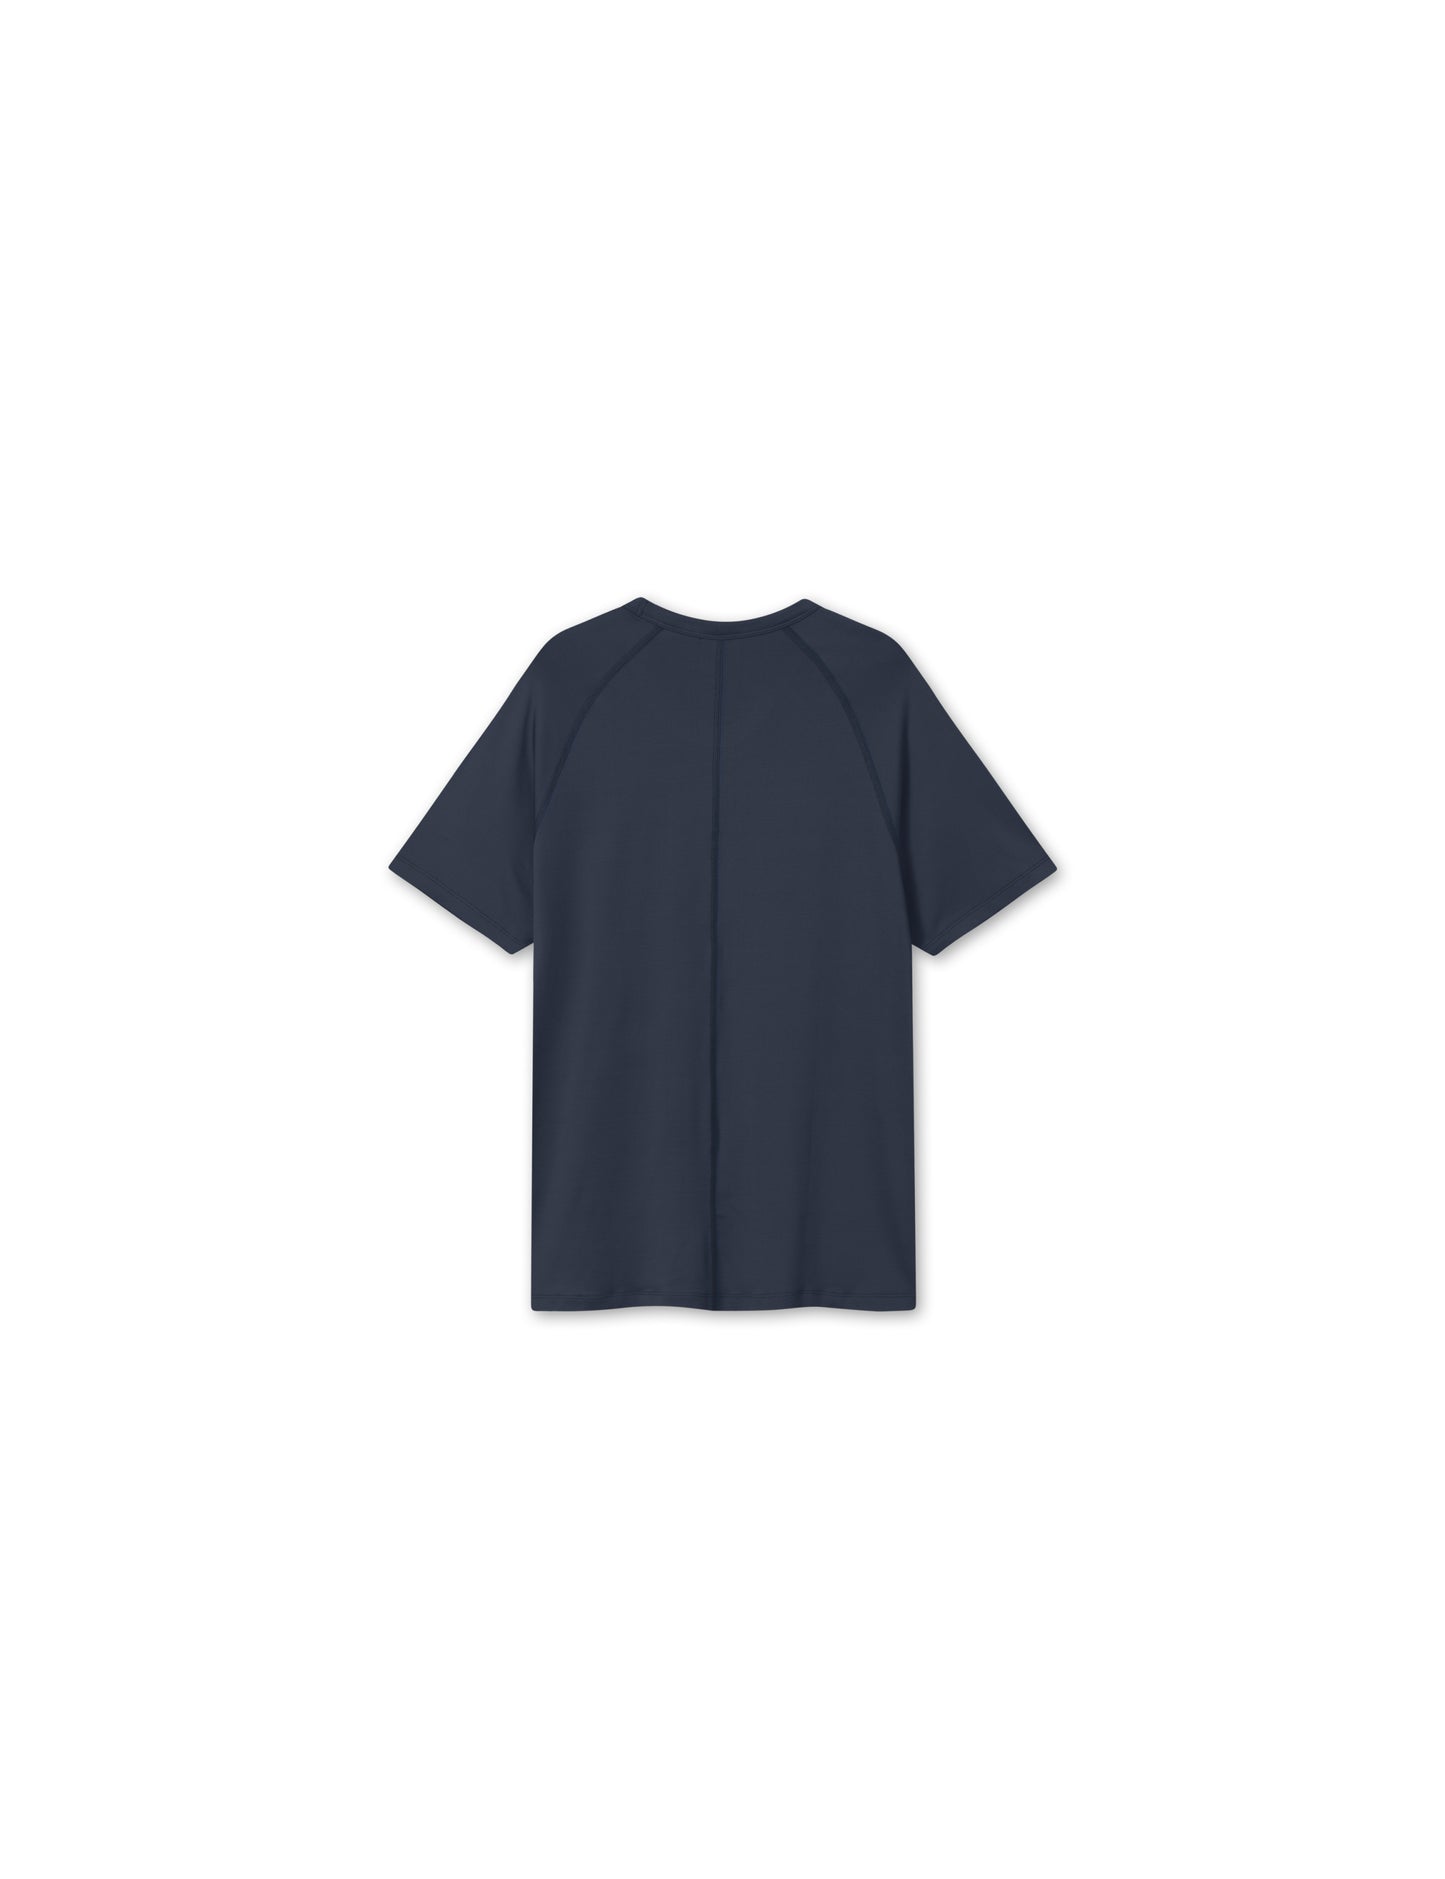 Forét - Game T-shirt - navy